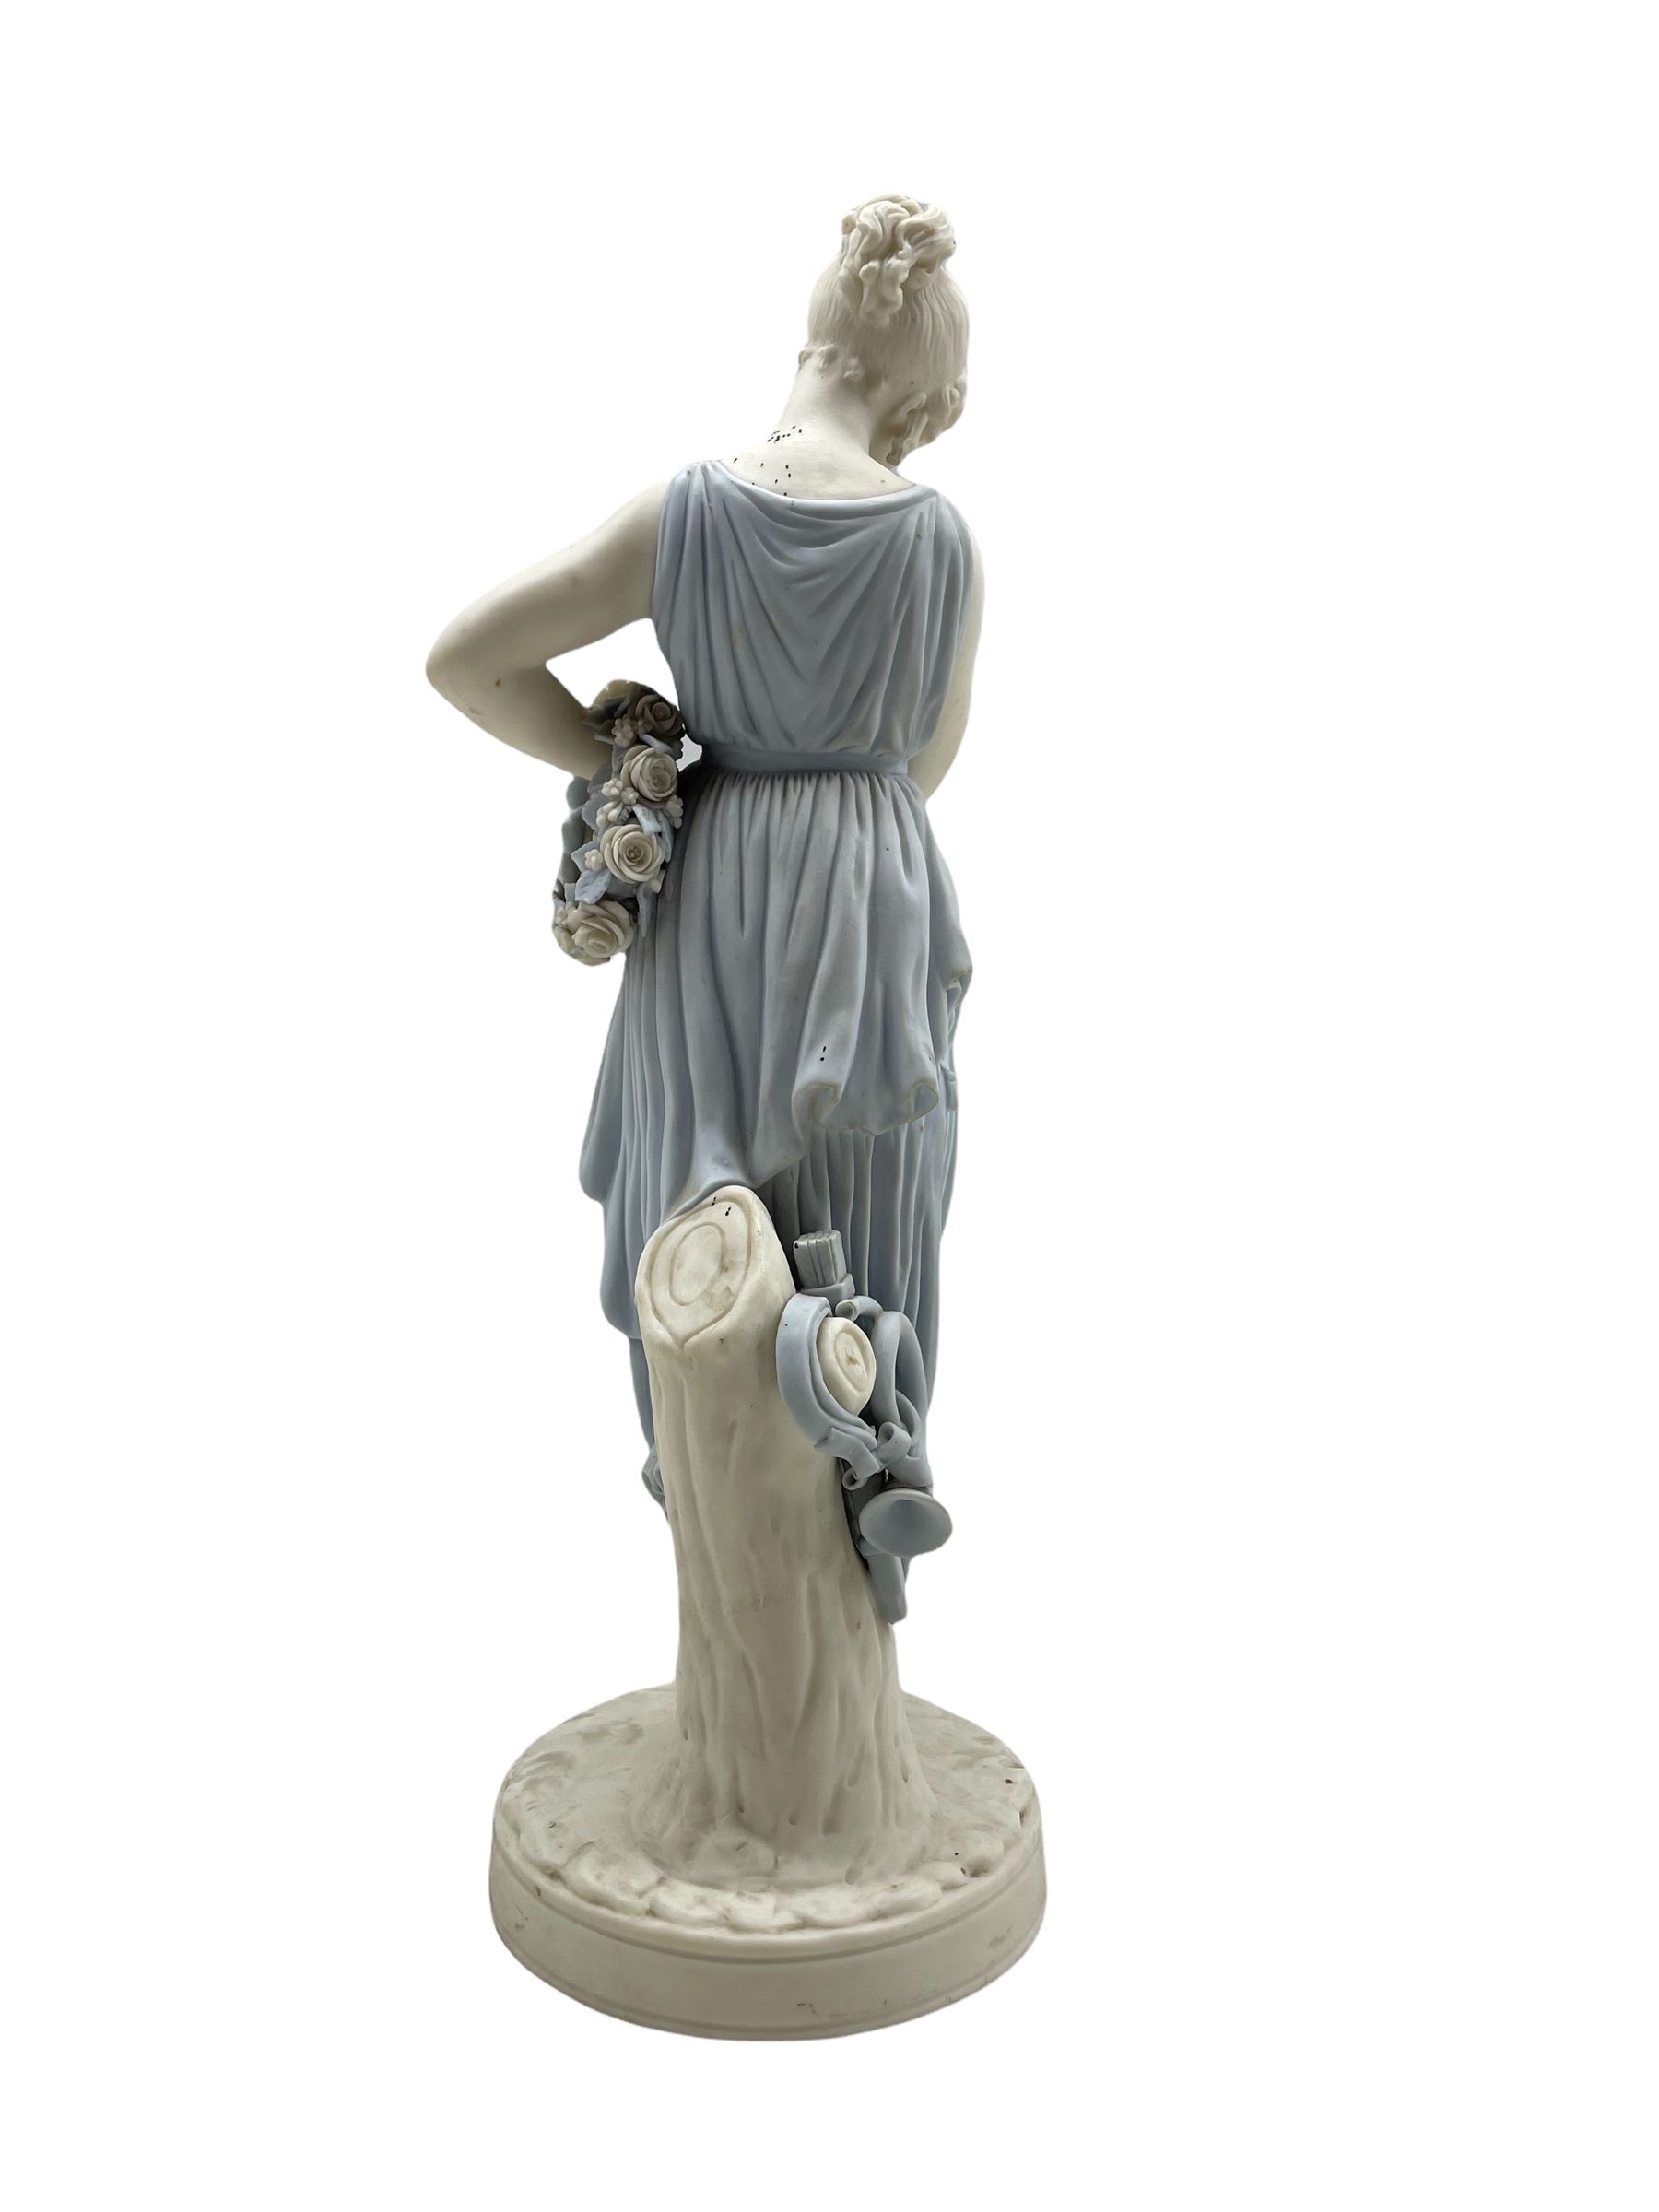 Victorian Minton coloured Parian ware figure of Grecian maiden after Antonio Canova - Image 2 of 3